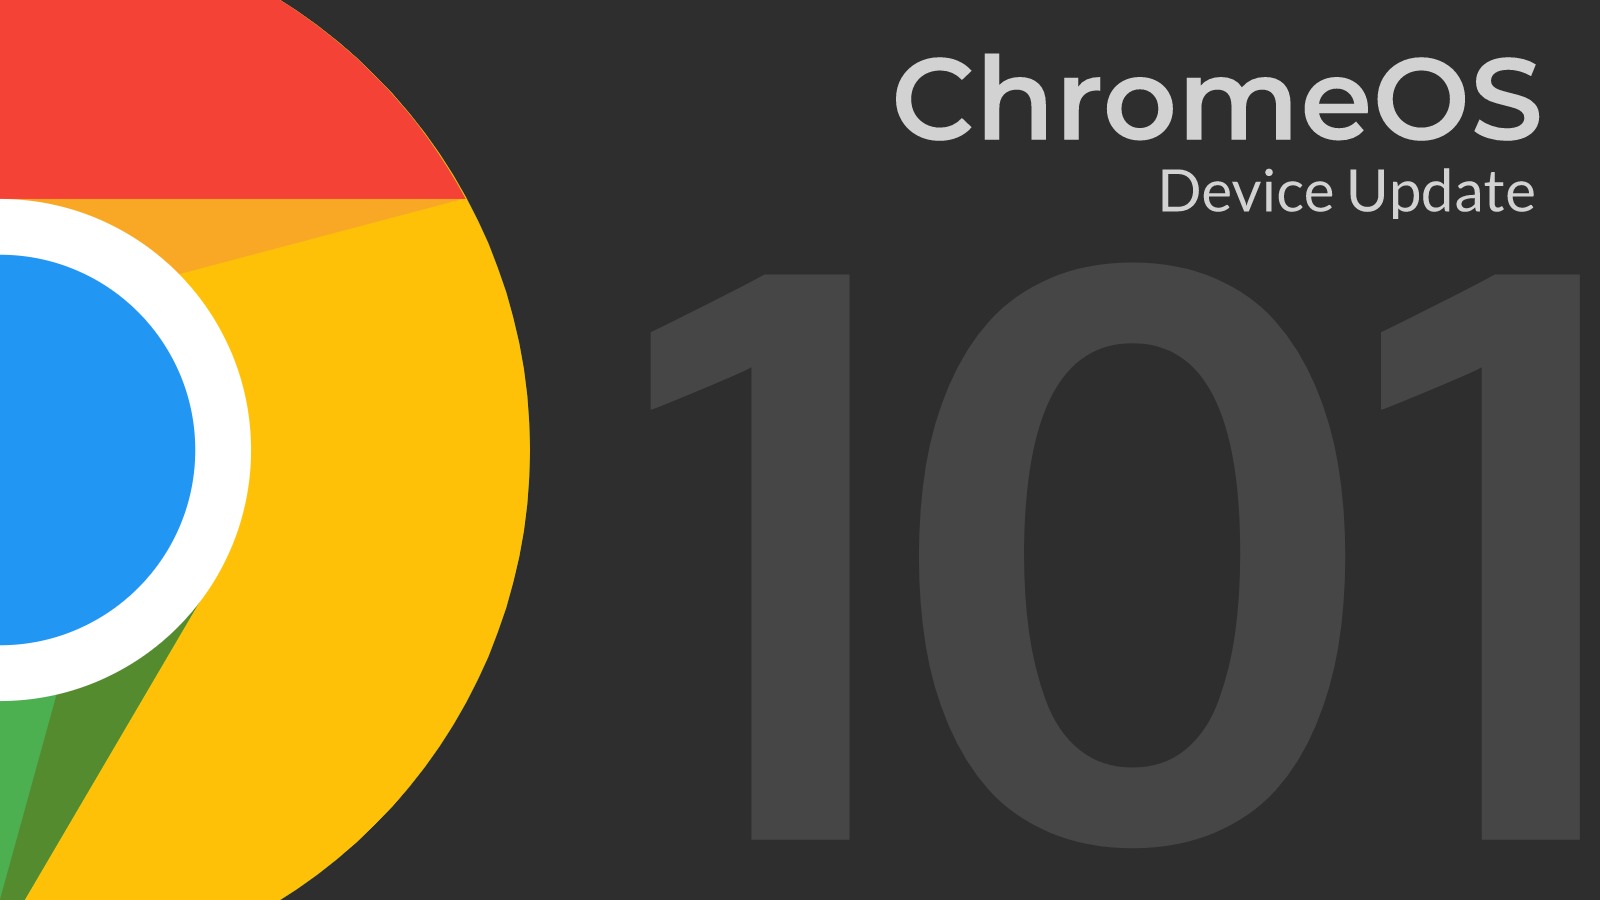 ChromeOS 101 has finally arrived